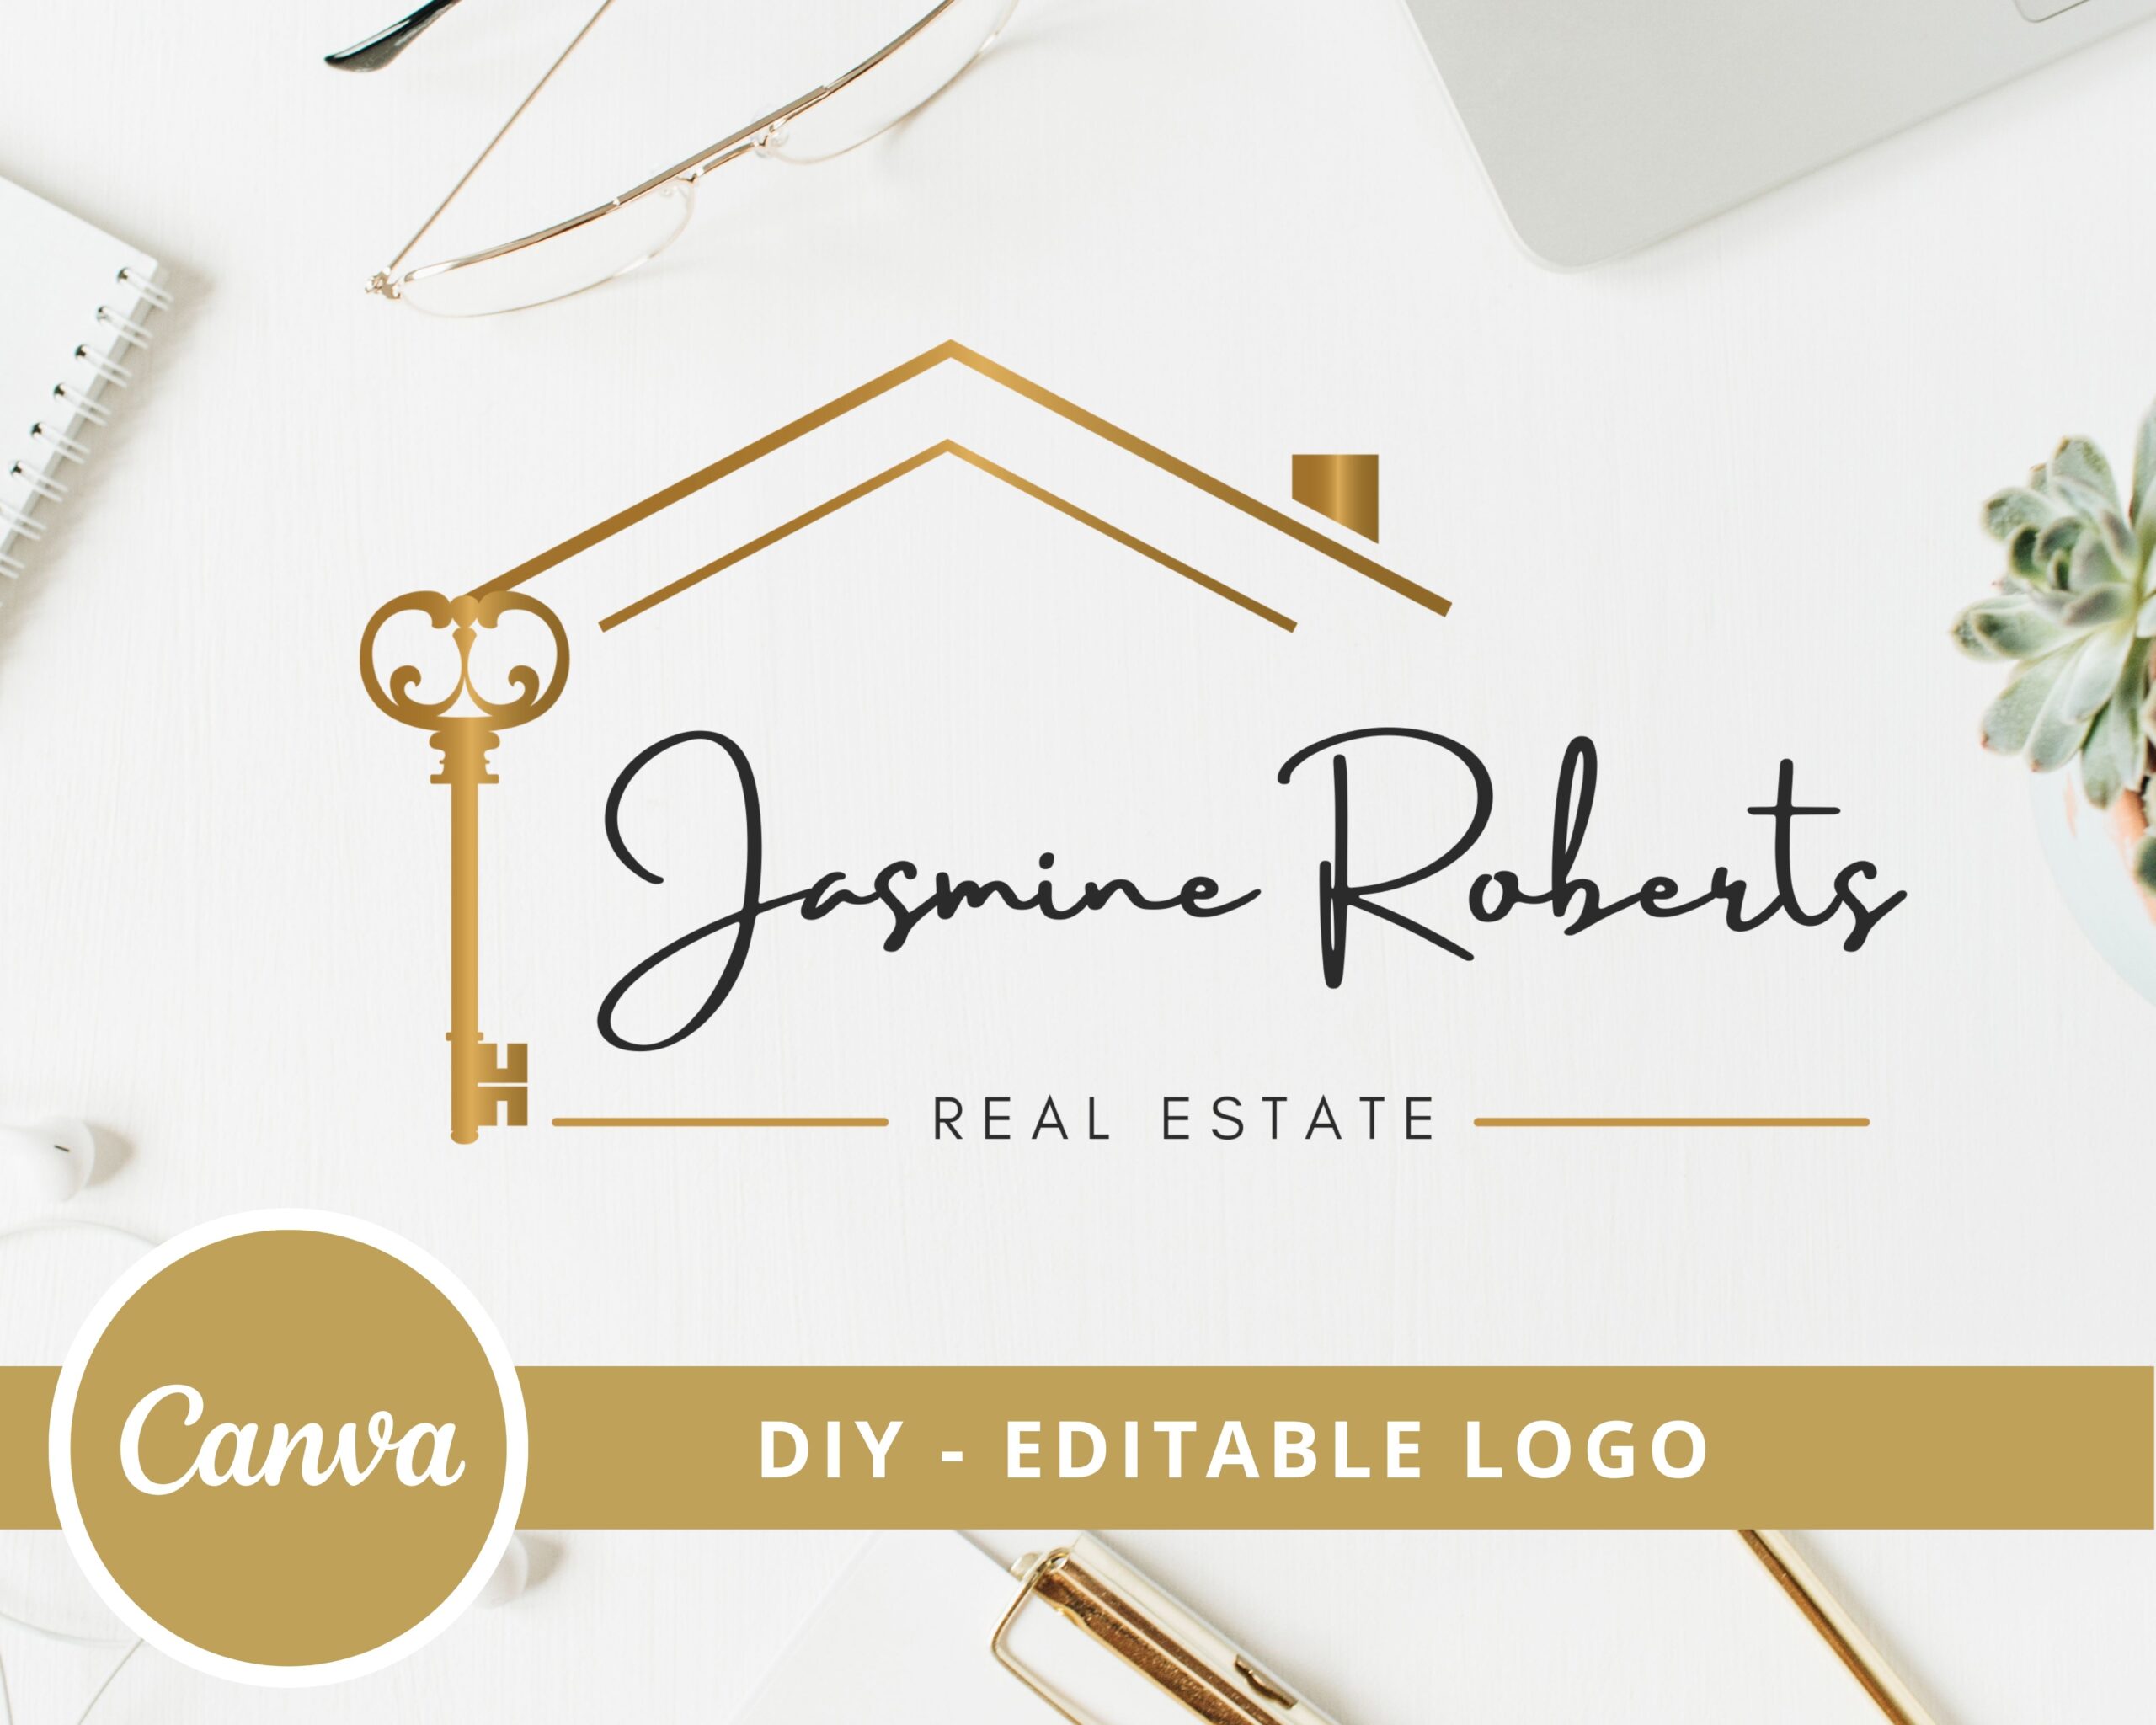 Real Estate Logo and Marketing Materials